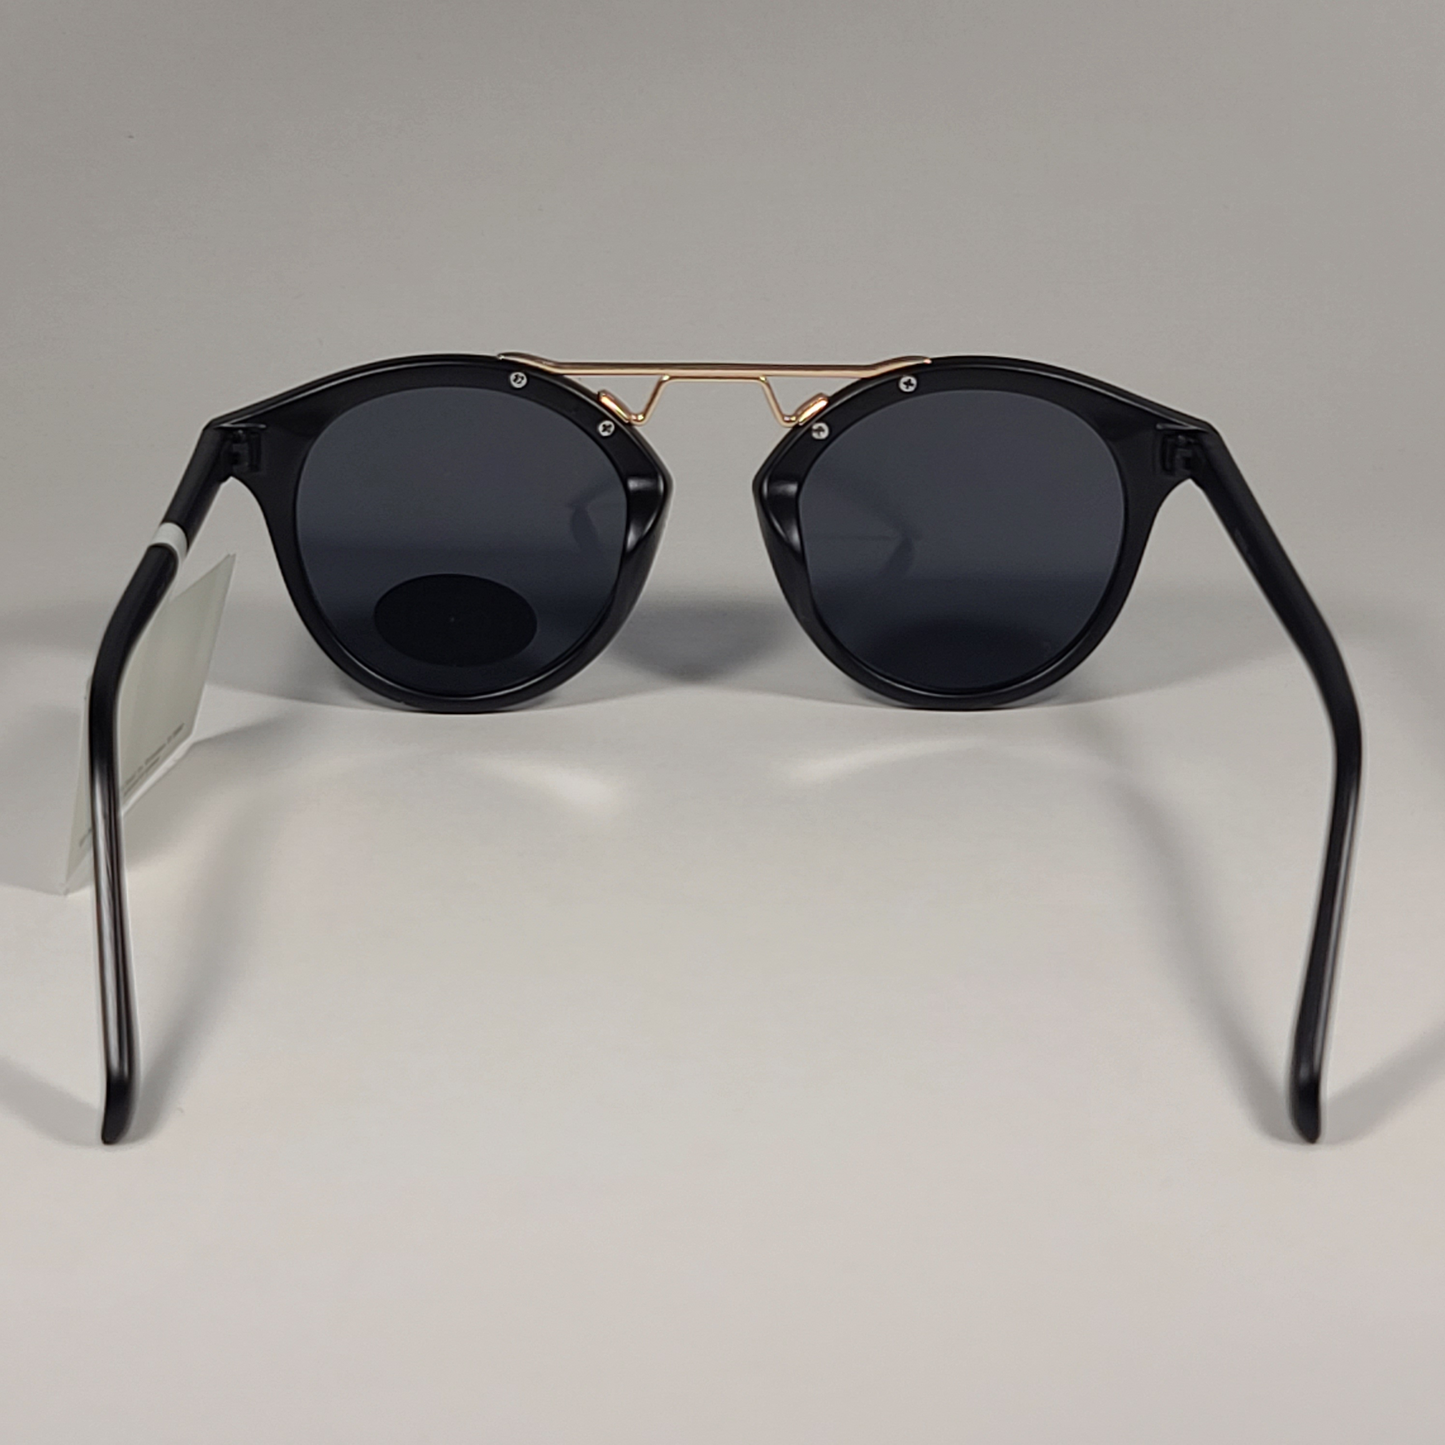 Fossil Round Brow Bar FW193 Women’s Sunglasses Matte Black Gold Frame Gray Lens - Sunglasses